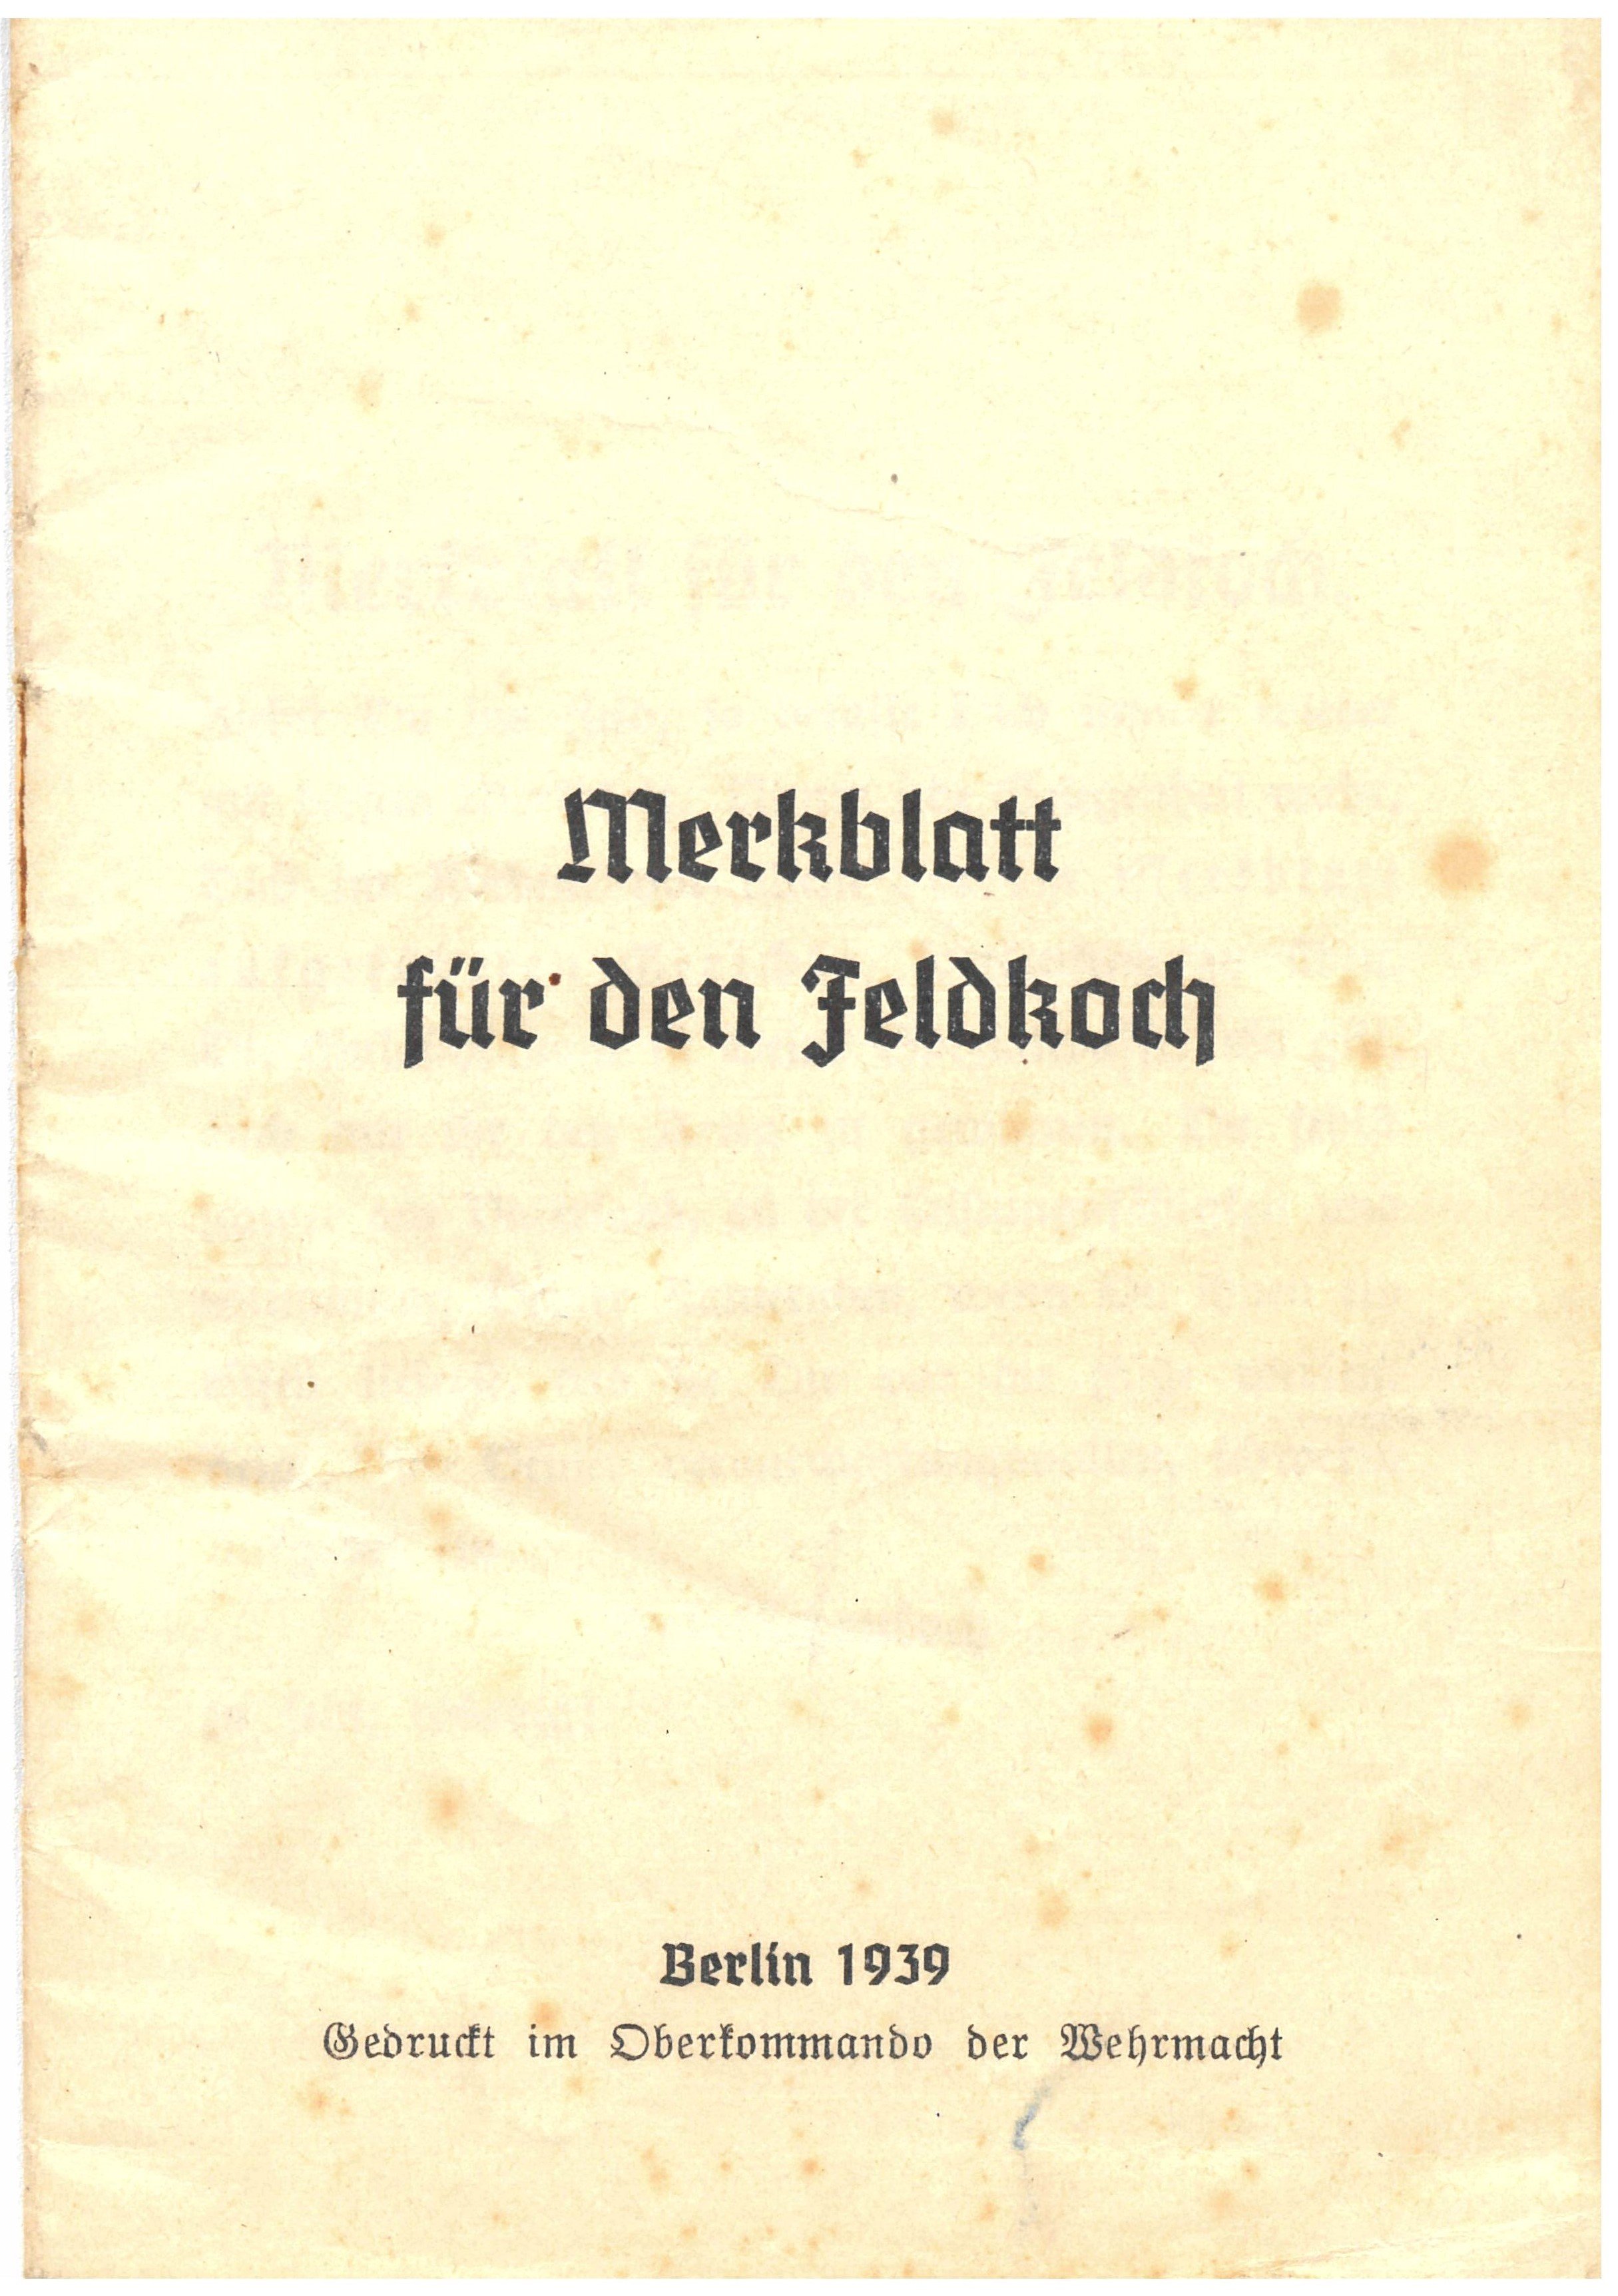 Merkblatt für den Feldkoch, Berlin, 1939 (Deutsch-Russisches Museum Berlin-Karlshorst CC BY-NC-SA)